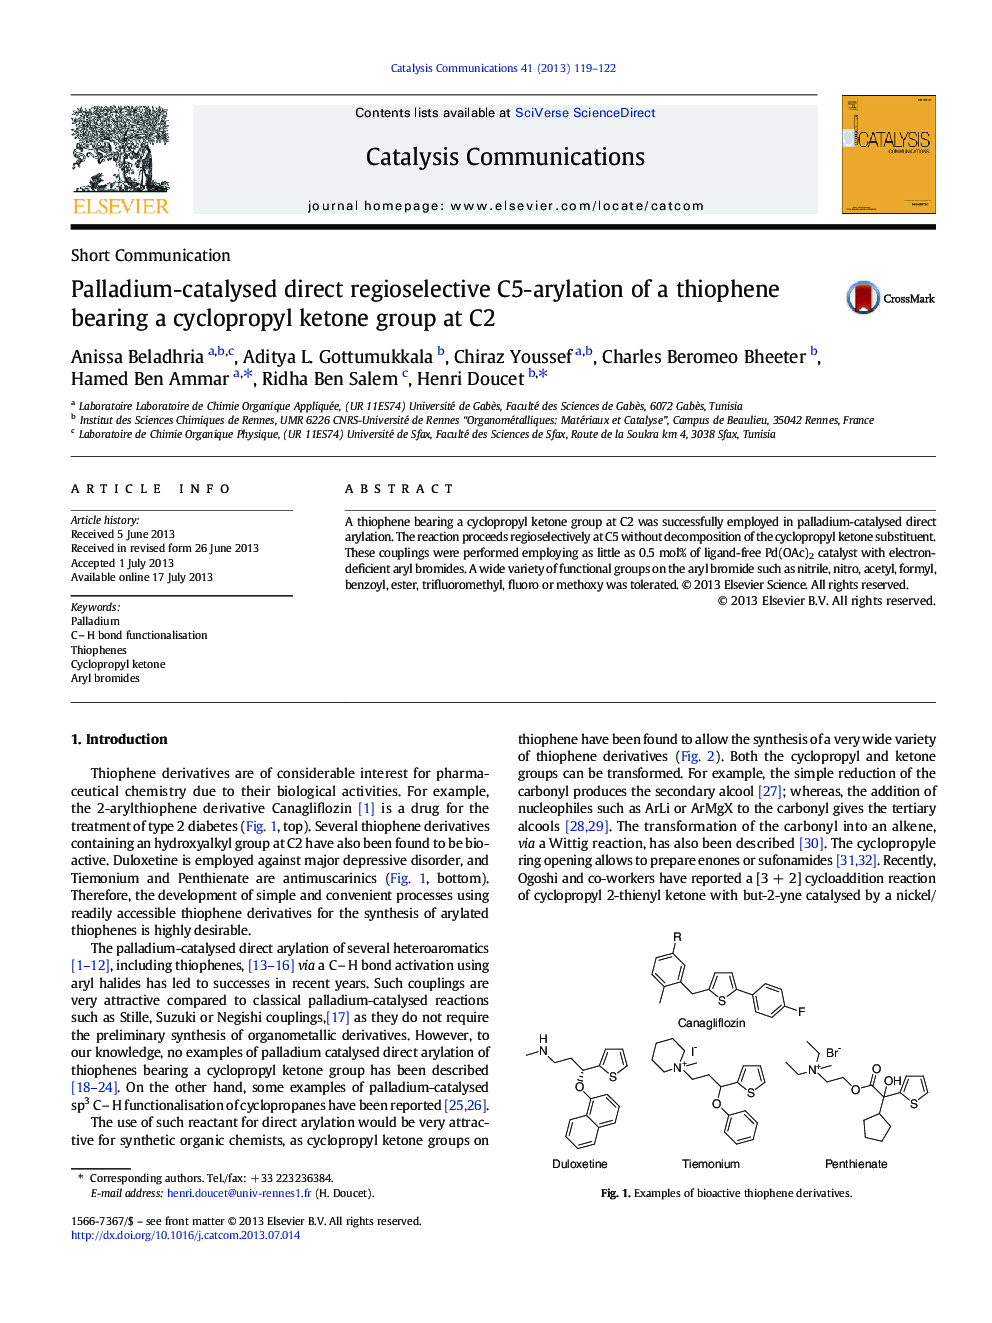 Palladium-catalysed direct regioselective C5-arylation of a thiophene bearing a cyclopropyl ketone group at C2